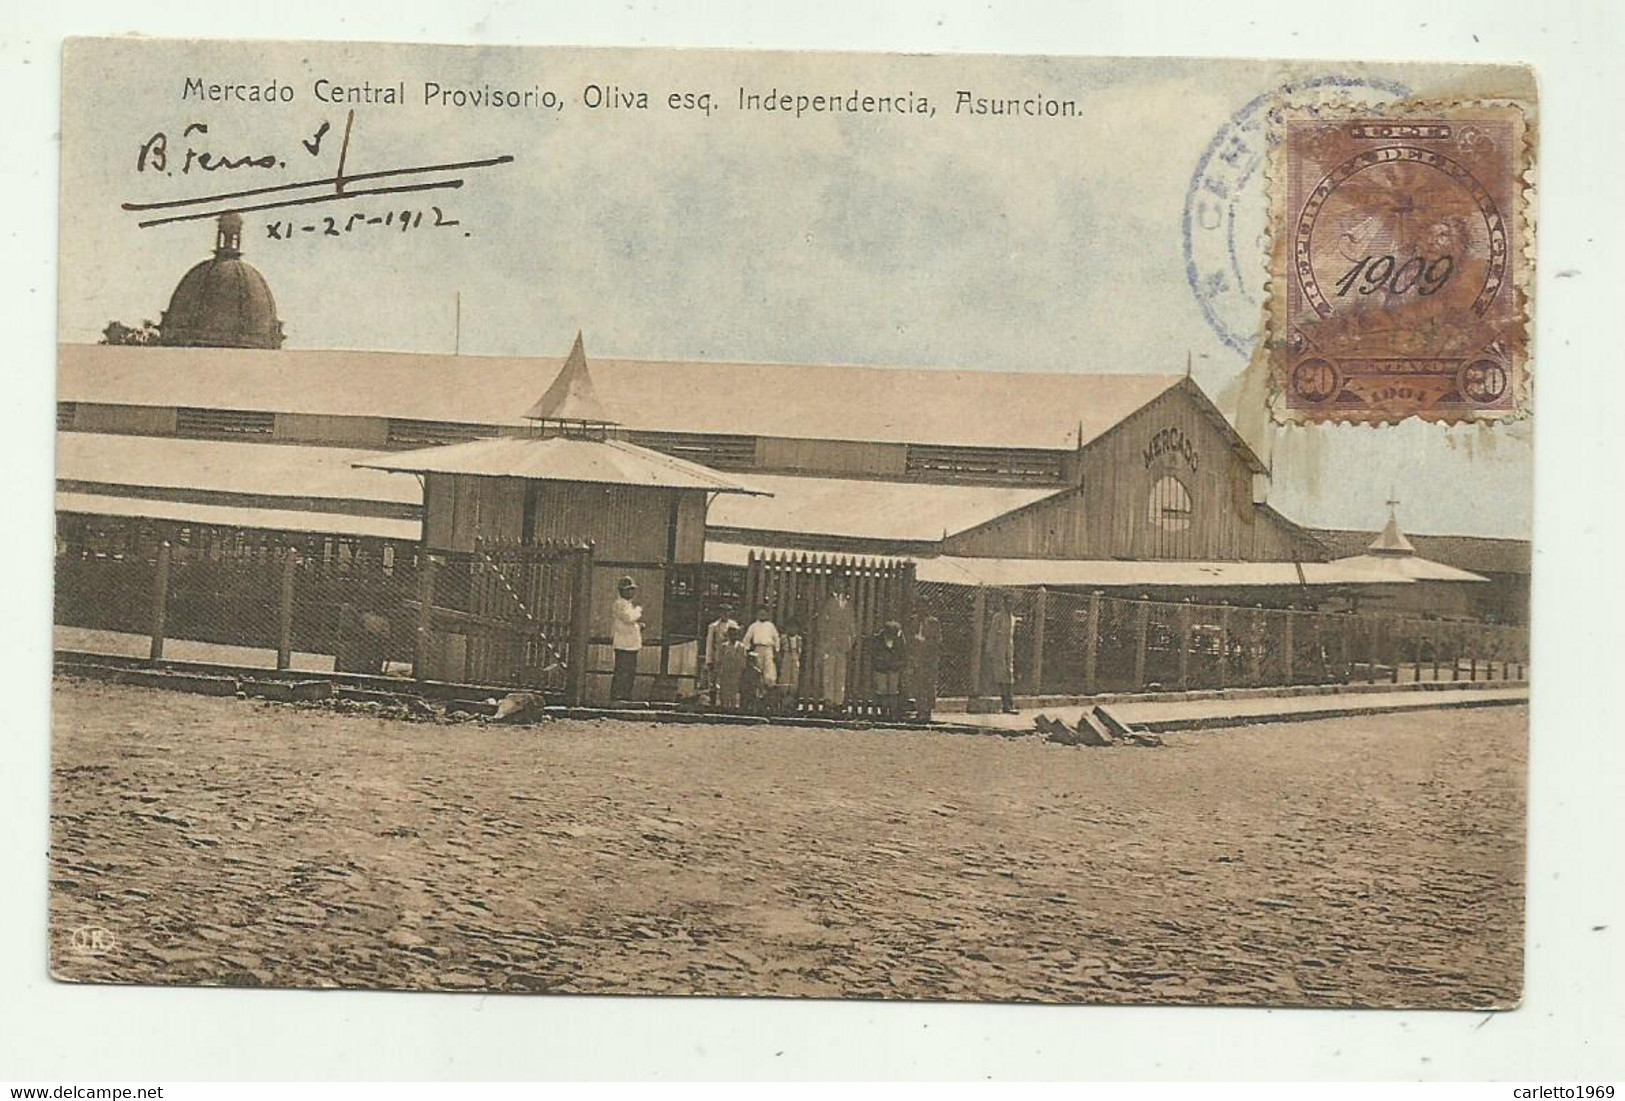 MERCADO CENTRAL PROVISORIO, OLIVA ESQ. INDEPENDENCIA, ASUNCION PARAGUAY 1912 - VIAGGIATA FP - Paraguay